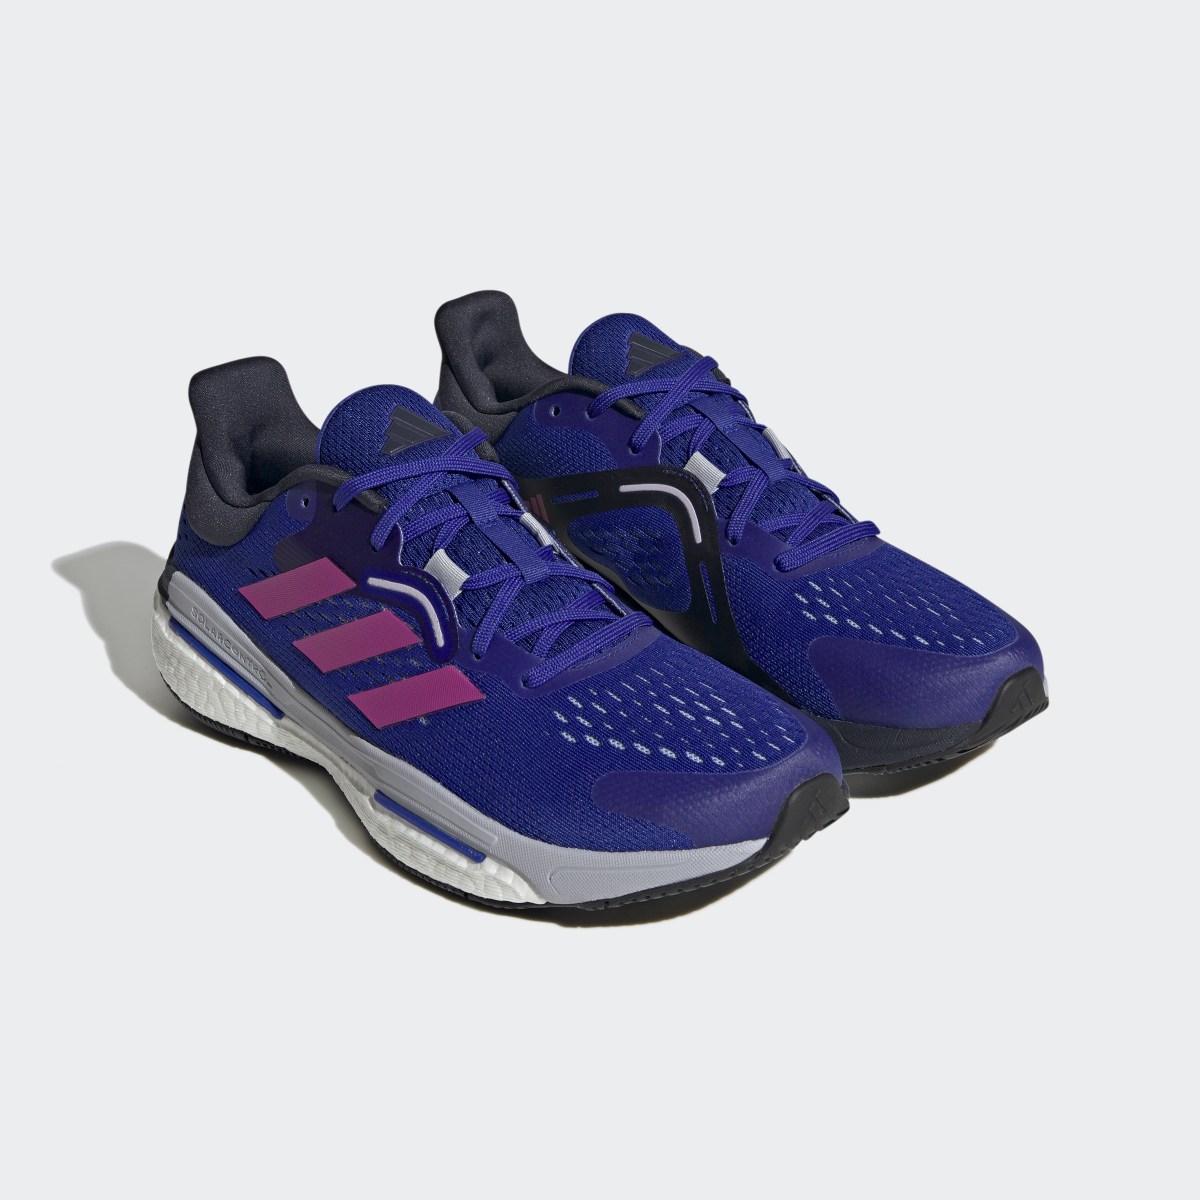 Adidas Solarcontrol Shoes. 5